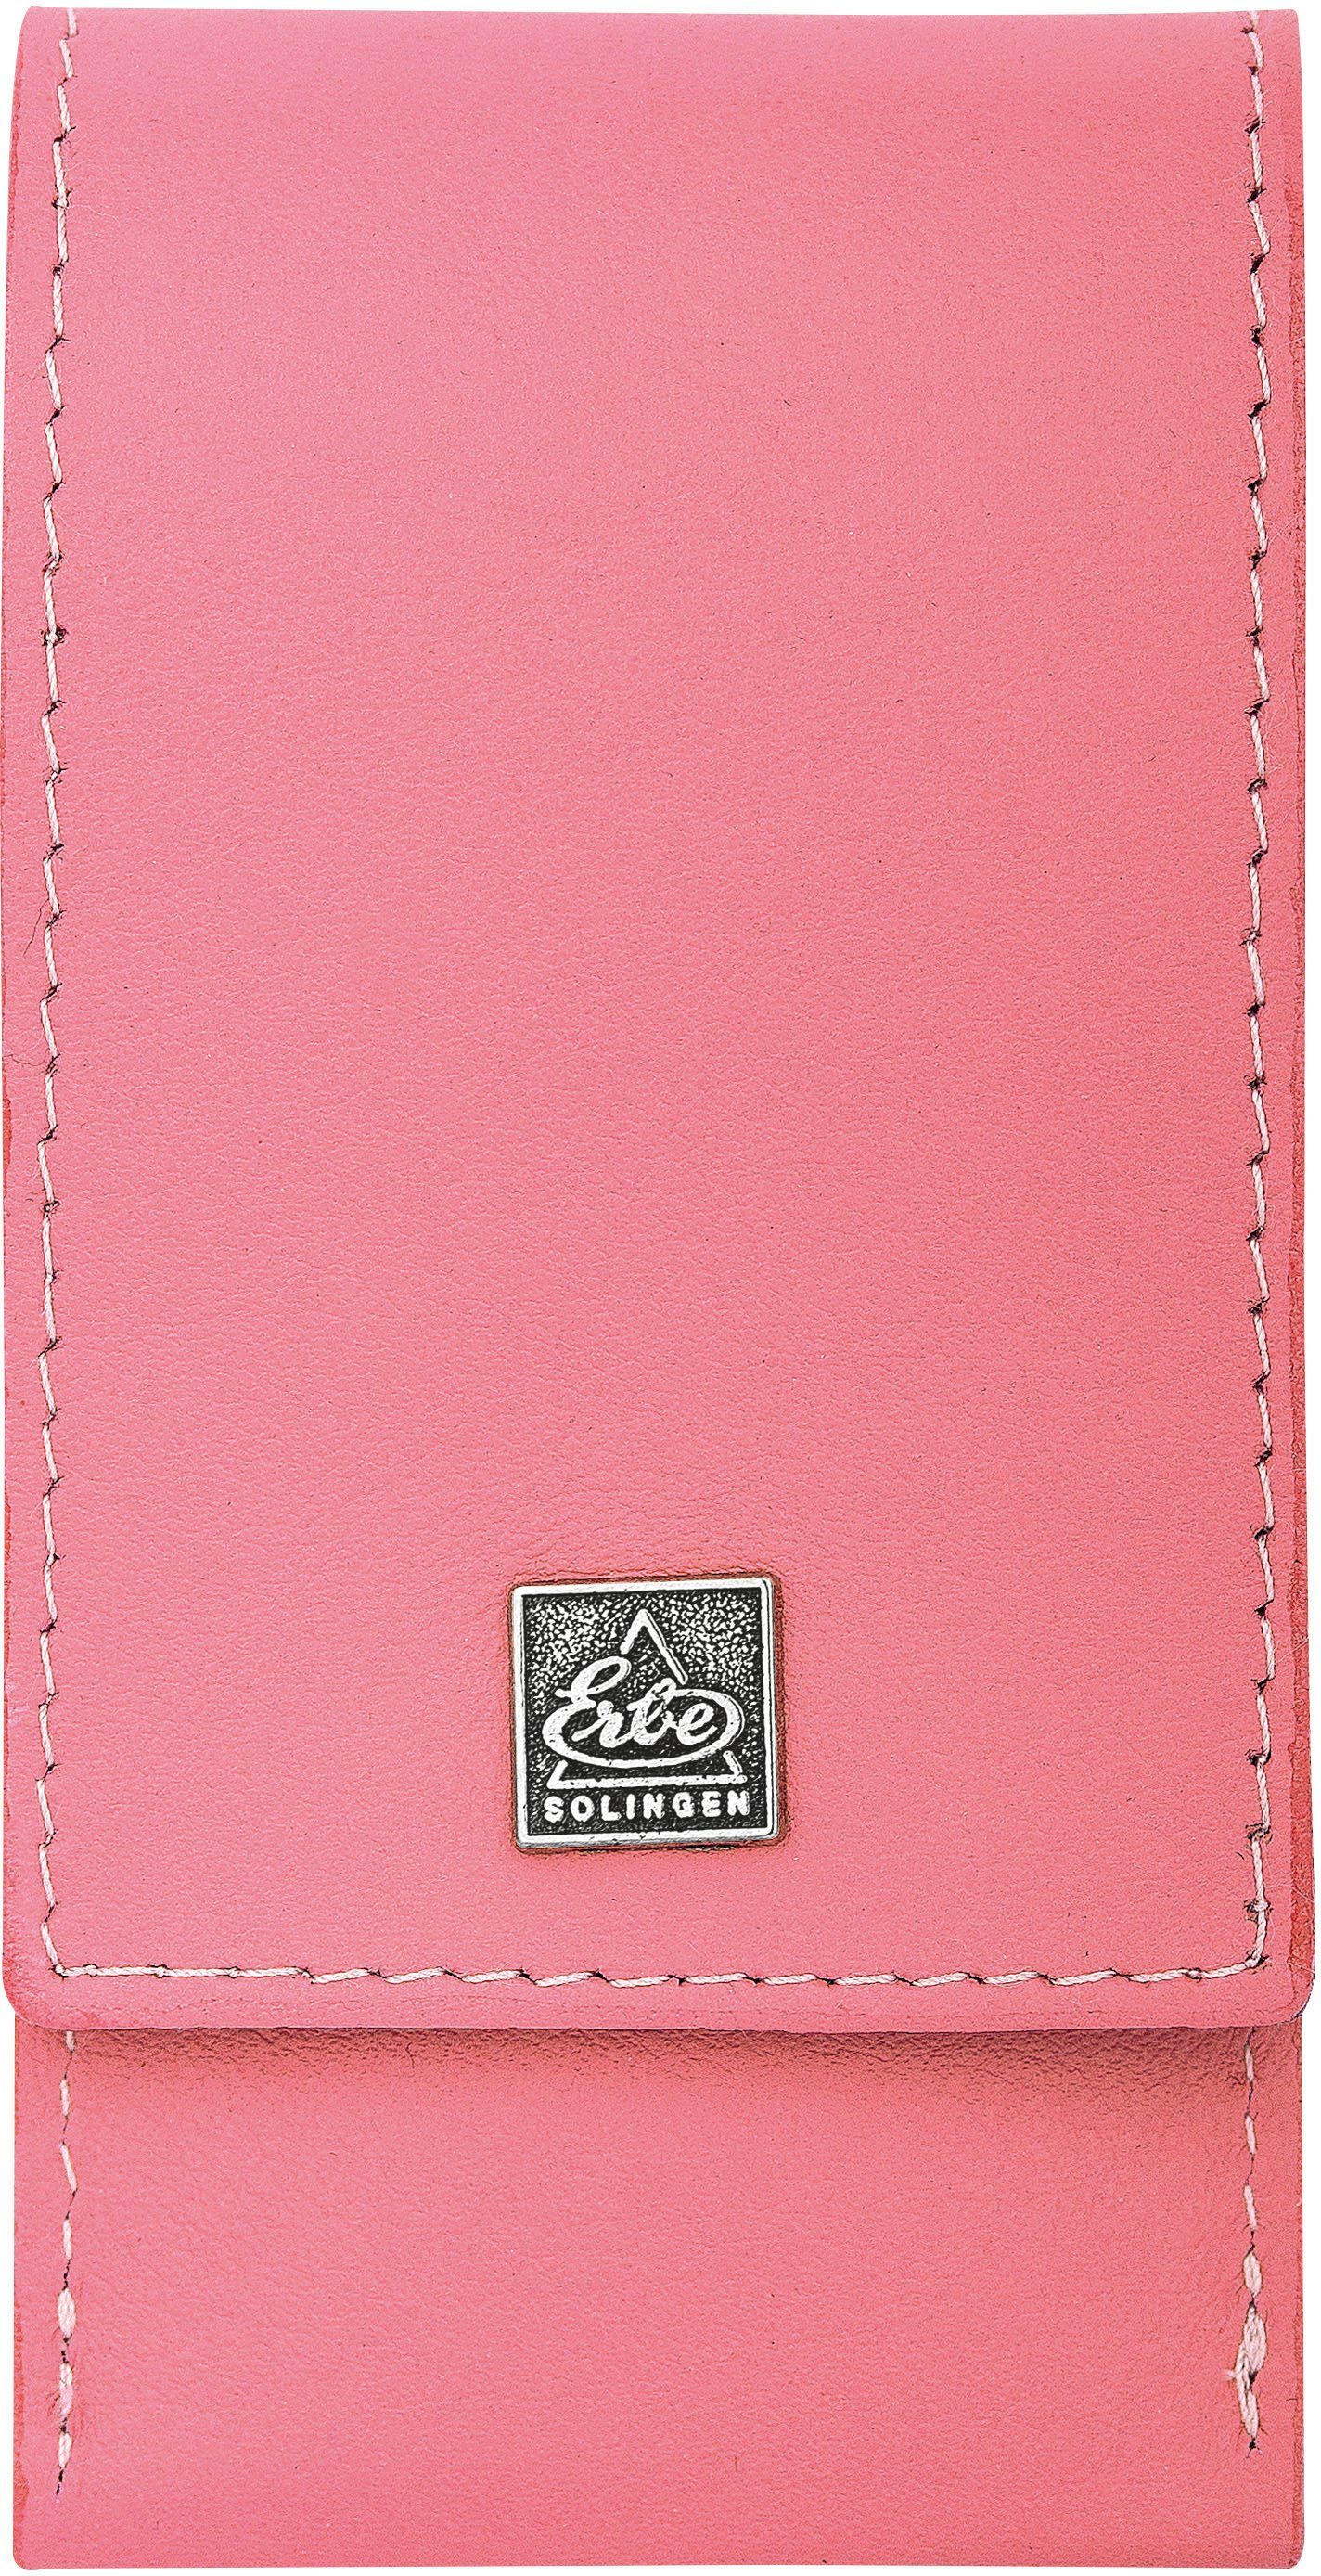 ERBE Maniküre-Etui ERBE Maniküre Set pink, 3 Serie tlg. "Colour", Taschen-Etui 3-tlg